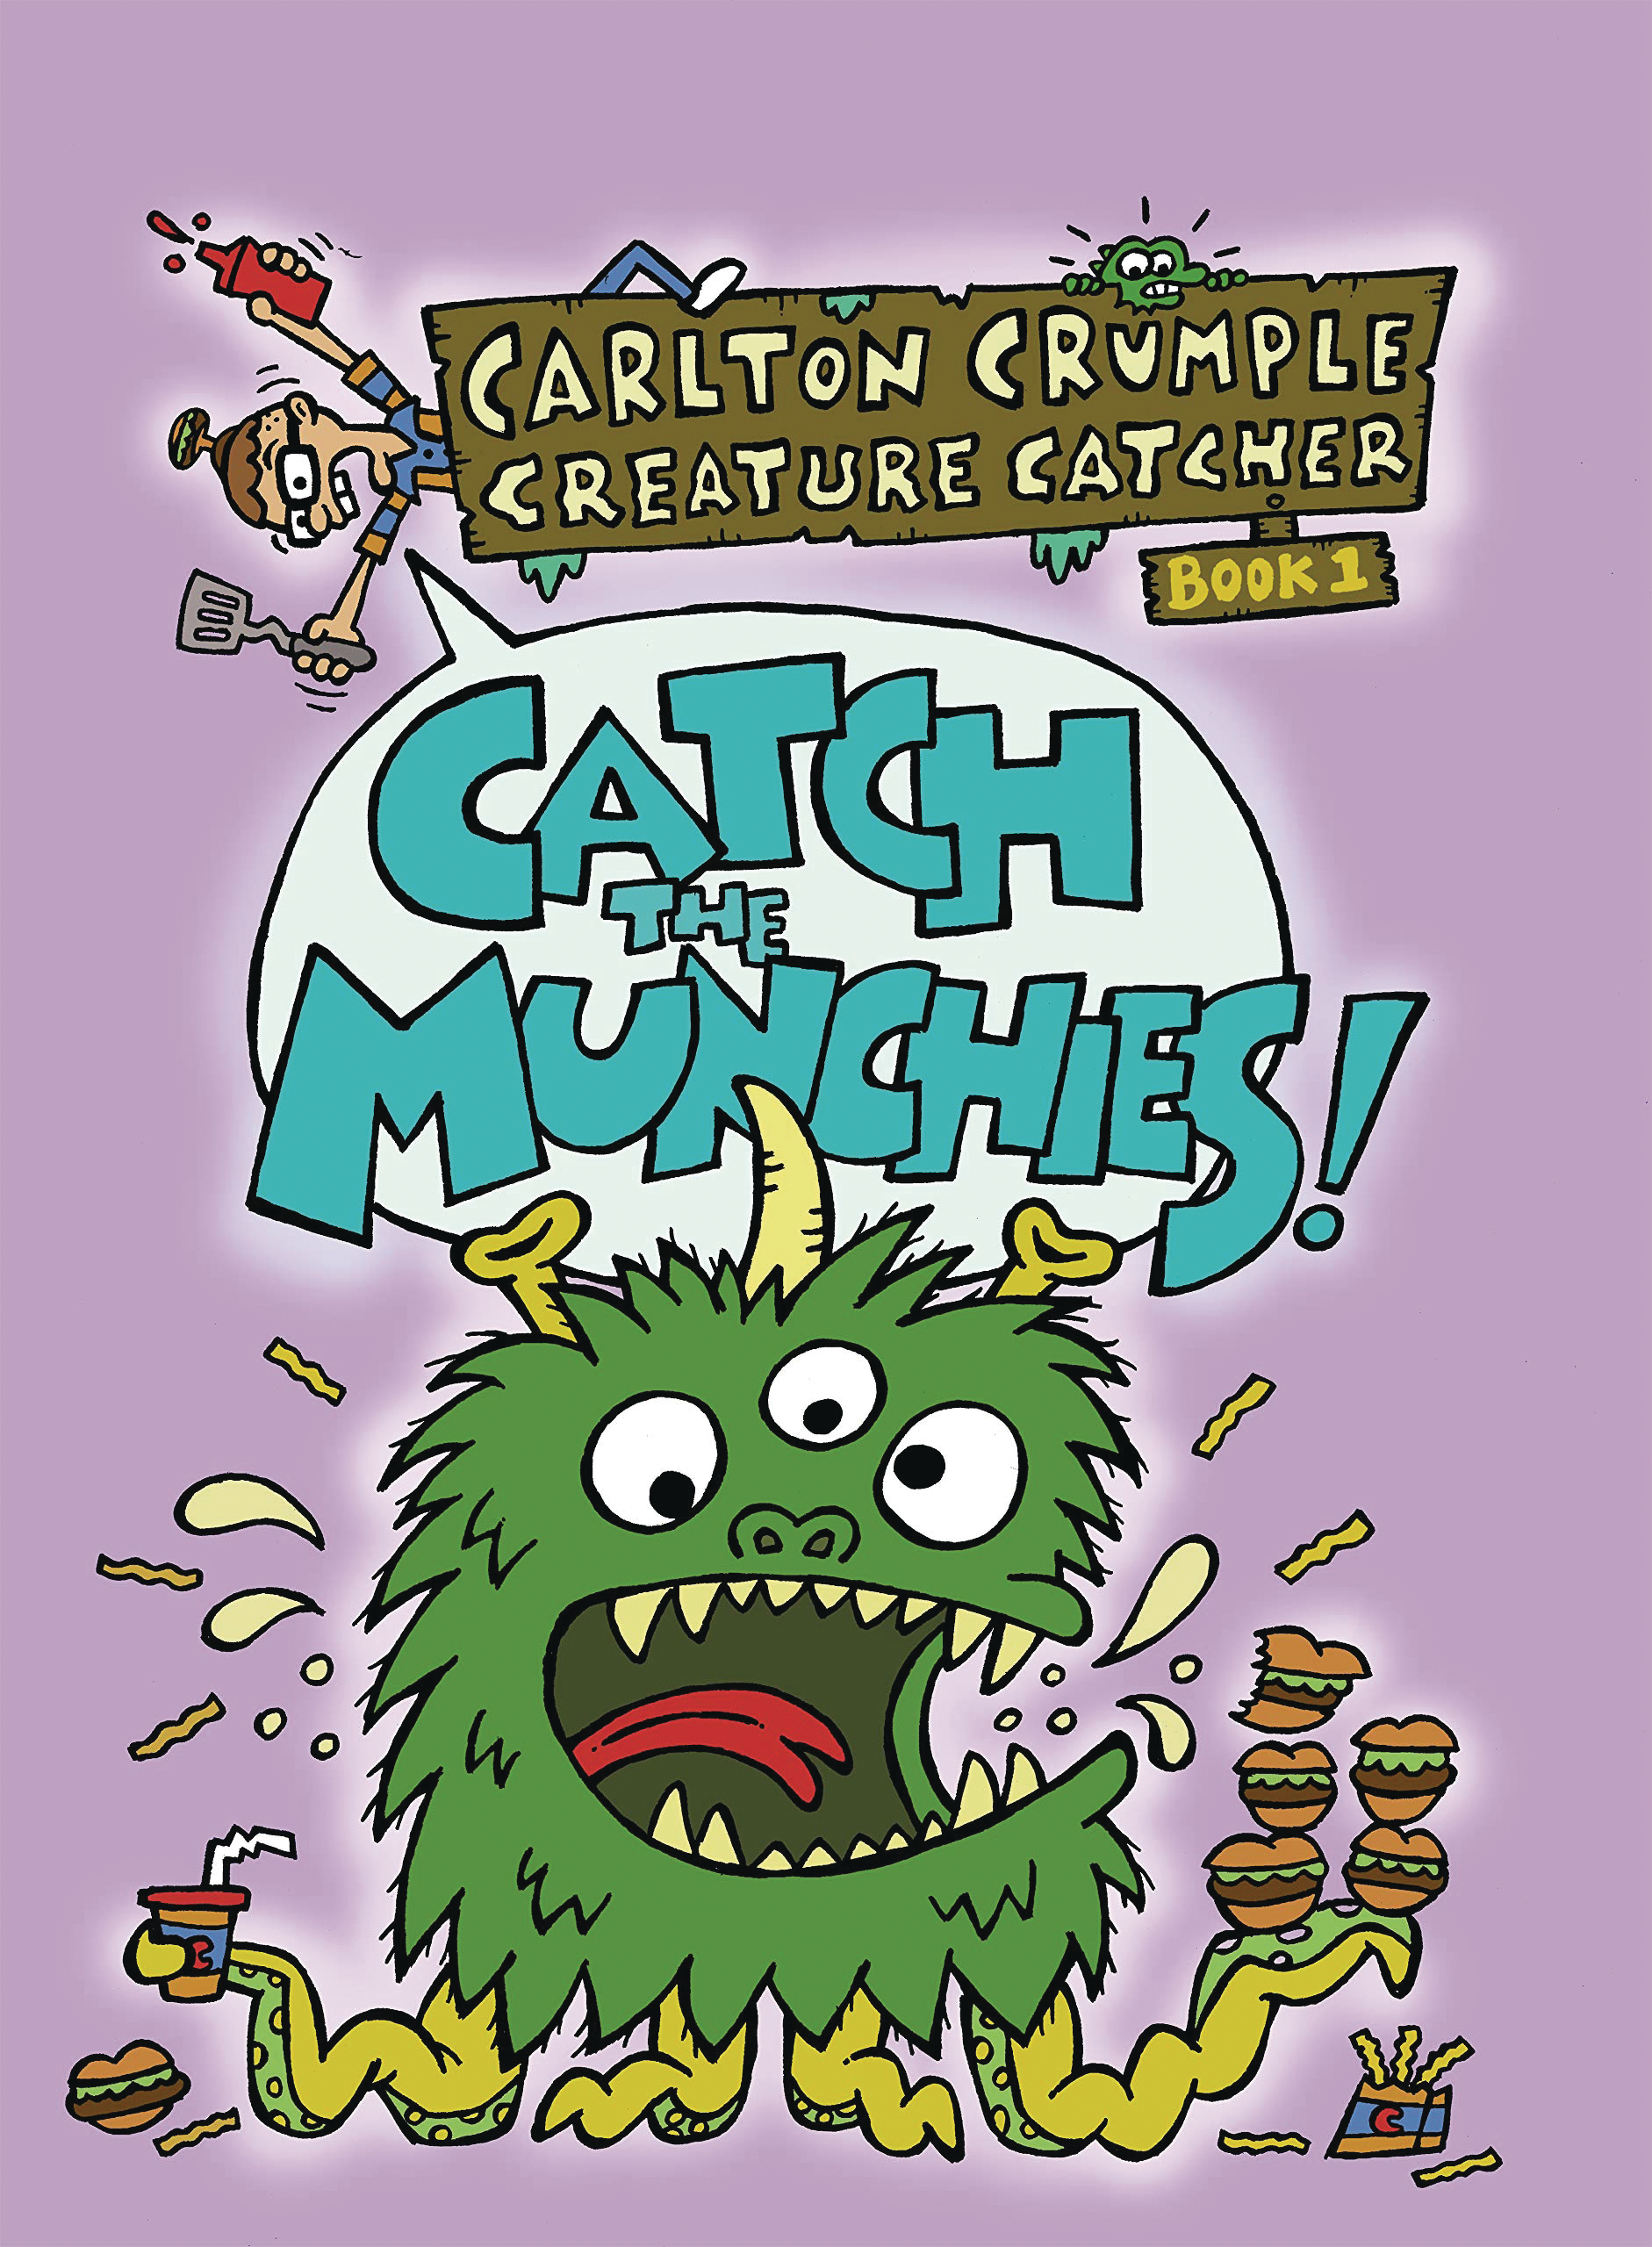 Carlton Crumple Creature Catcher Ya Graphic Novel Book 1 Catch Muchchies